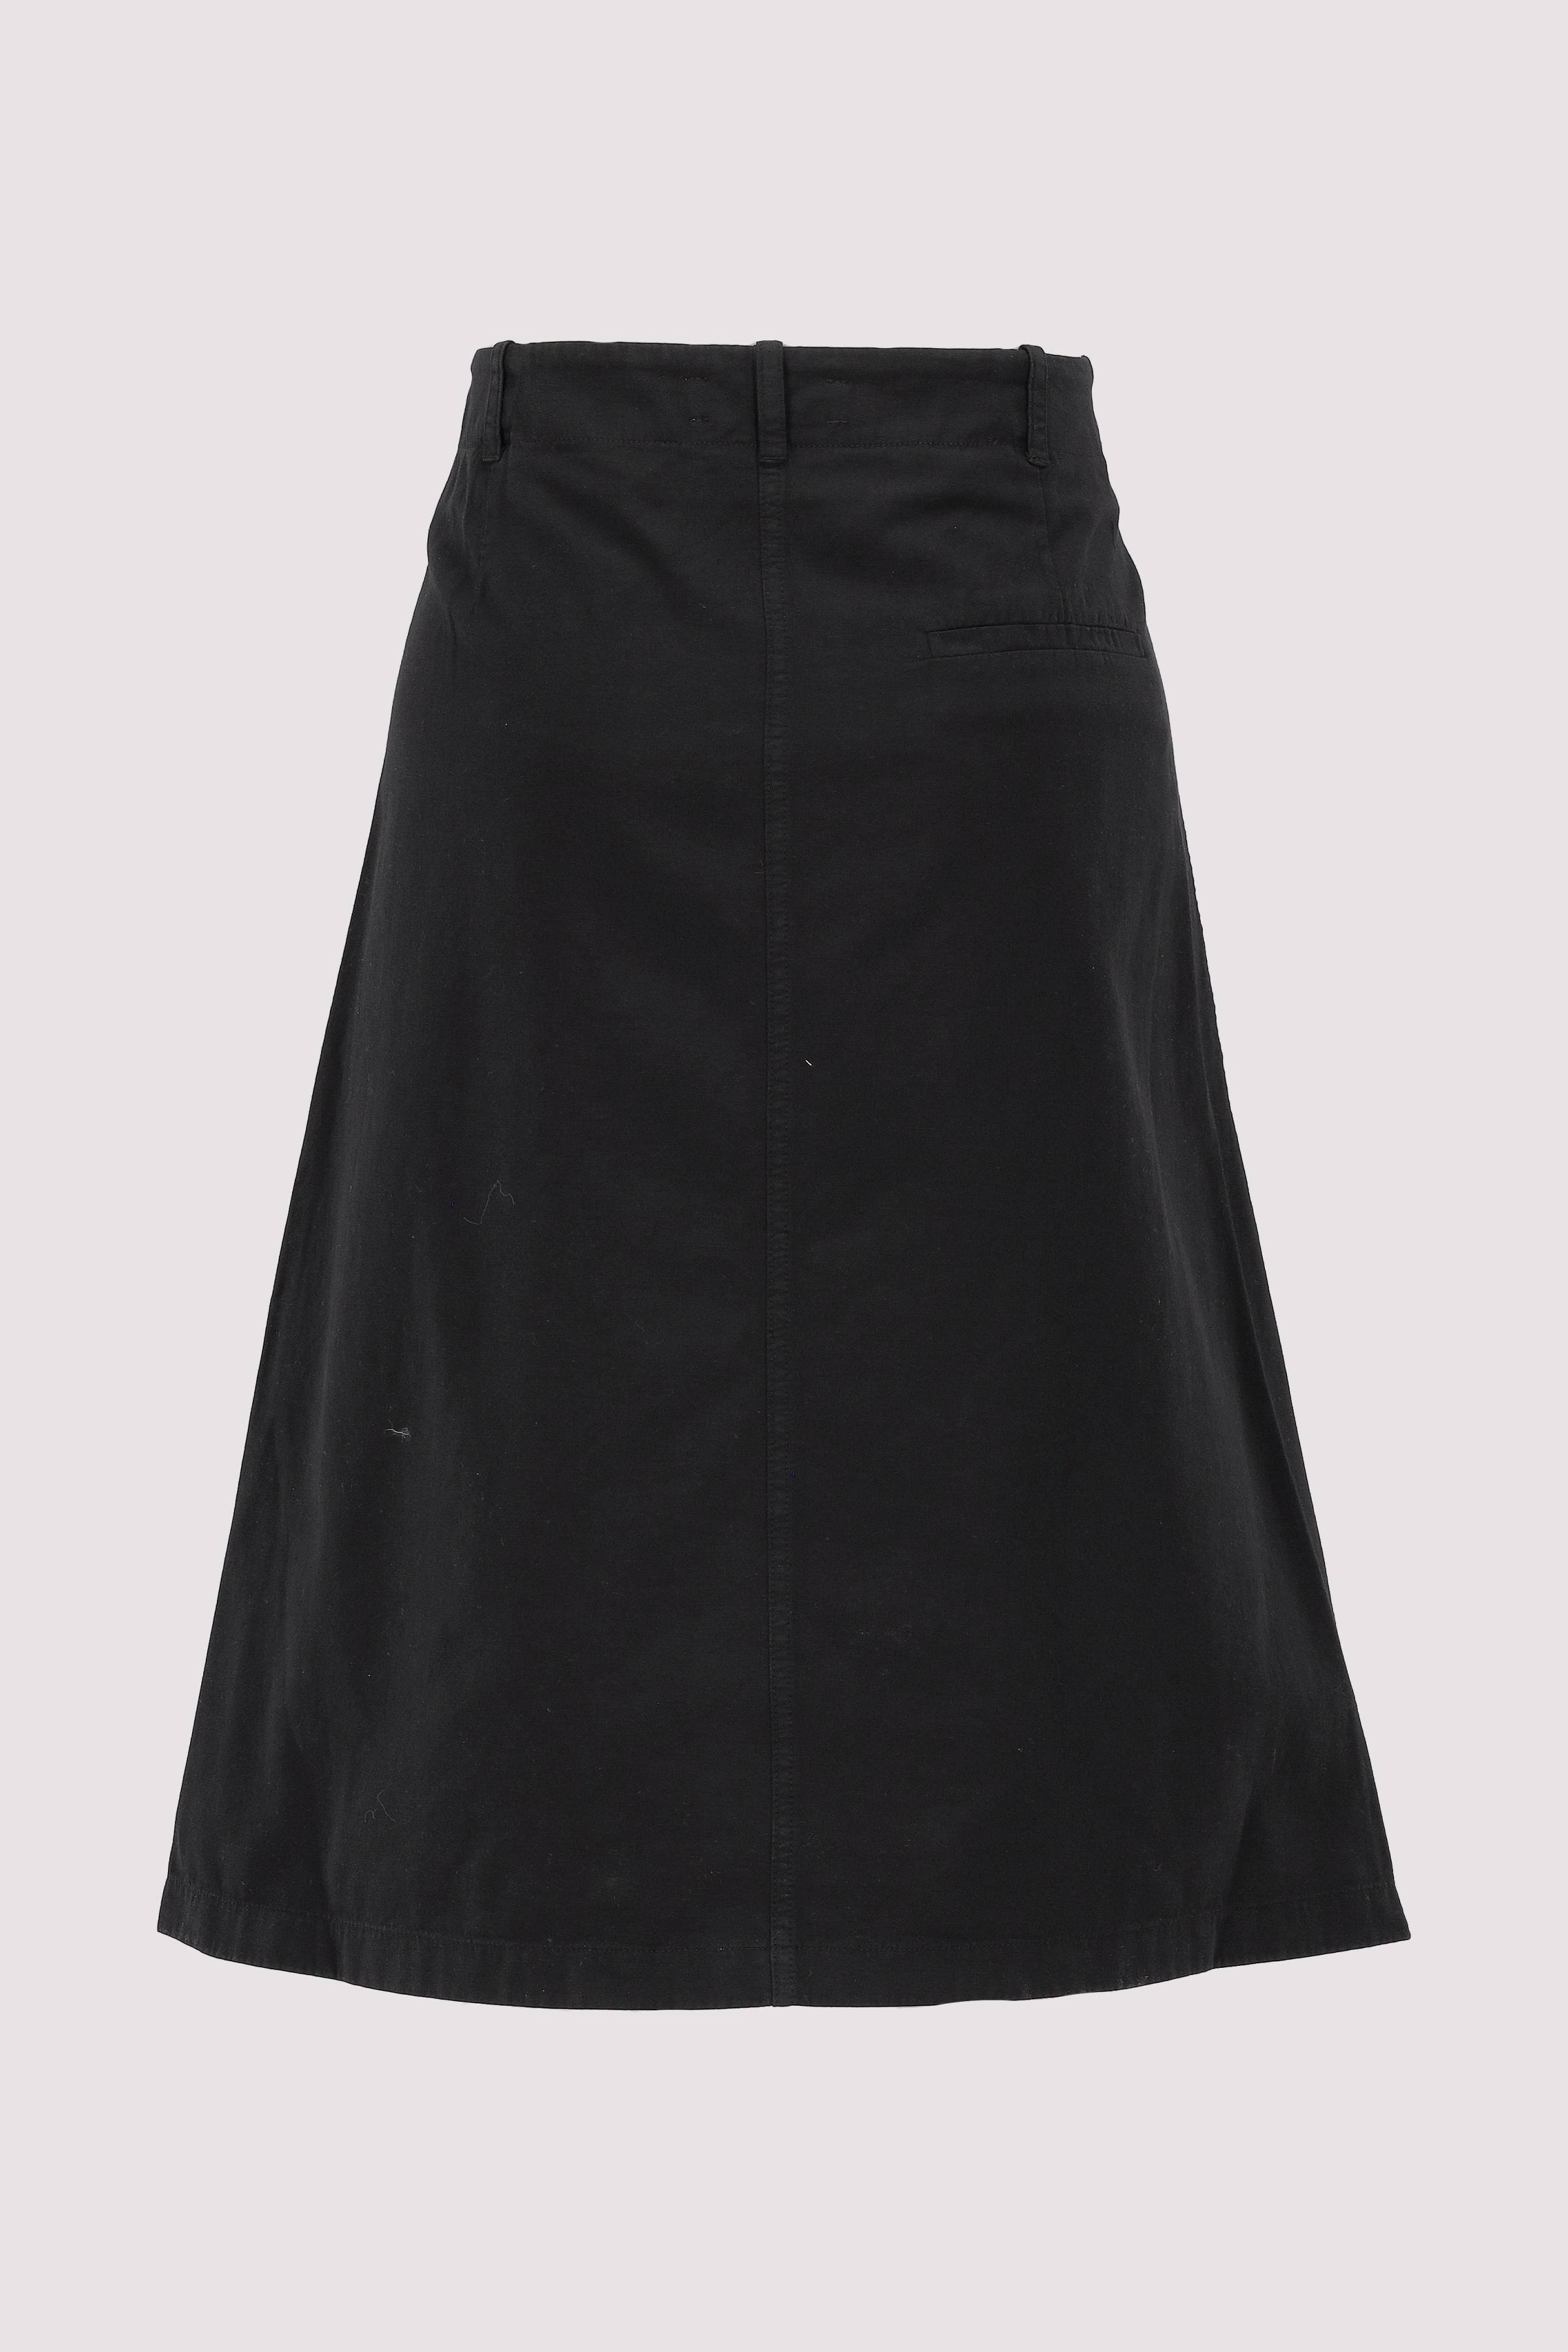 Skirt, high waisted, a-line, k